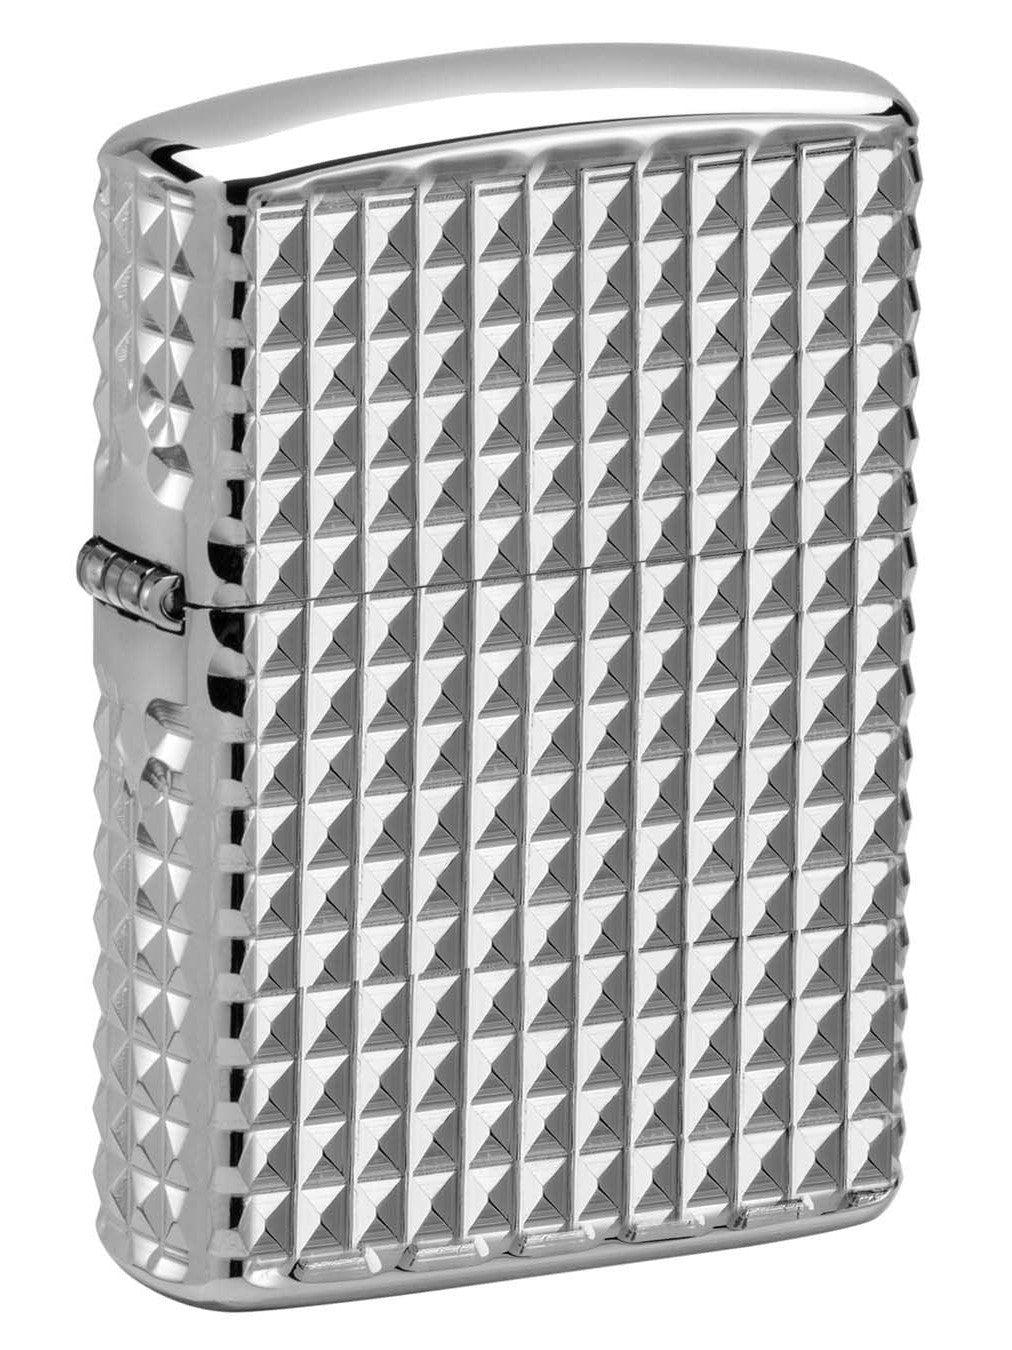 Zippo Lighter: Armor MultiCut Geometric Diamond Design - High Polish Chrome 48880